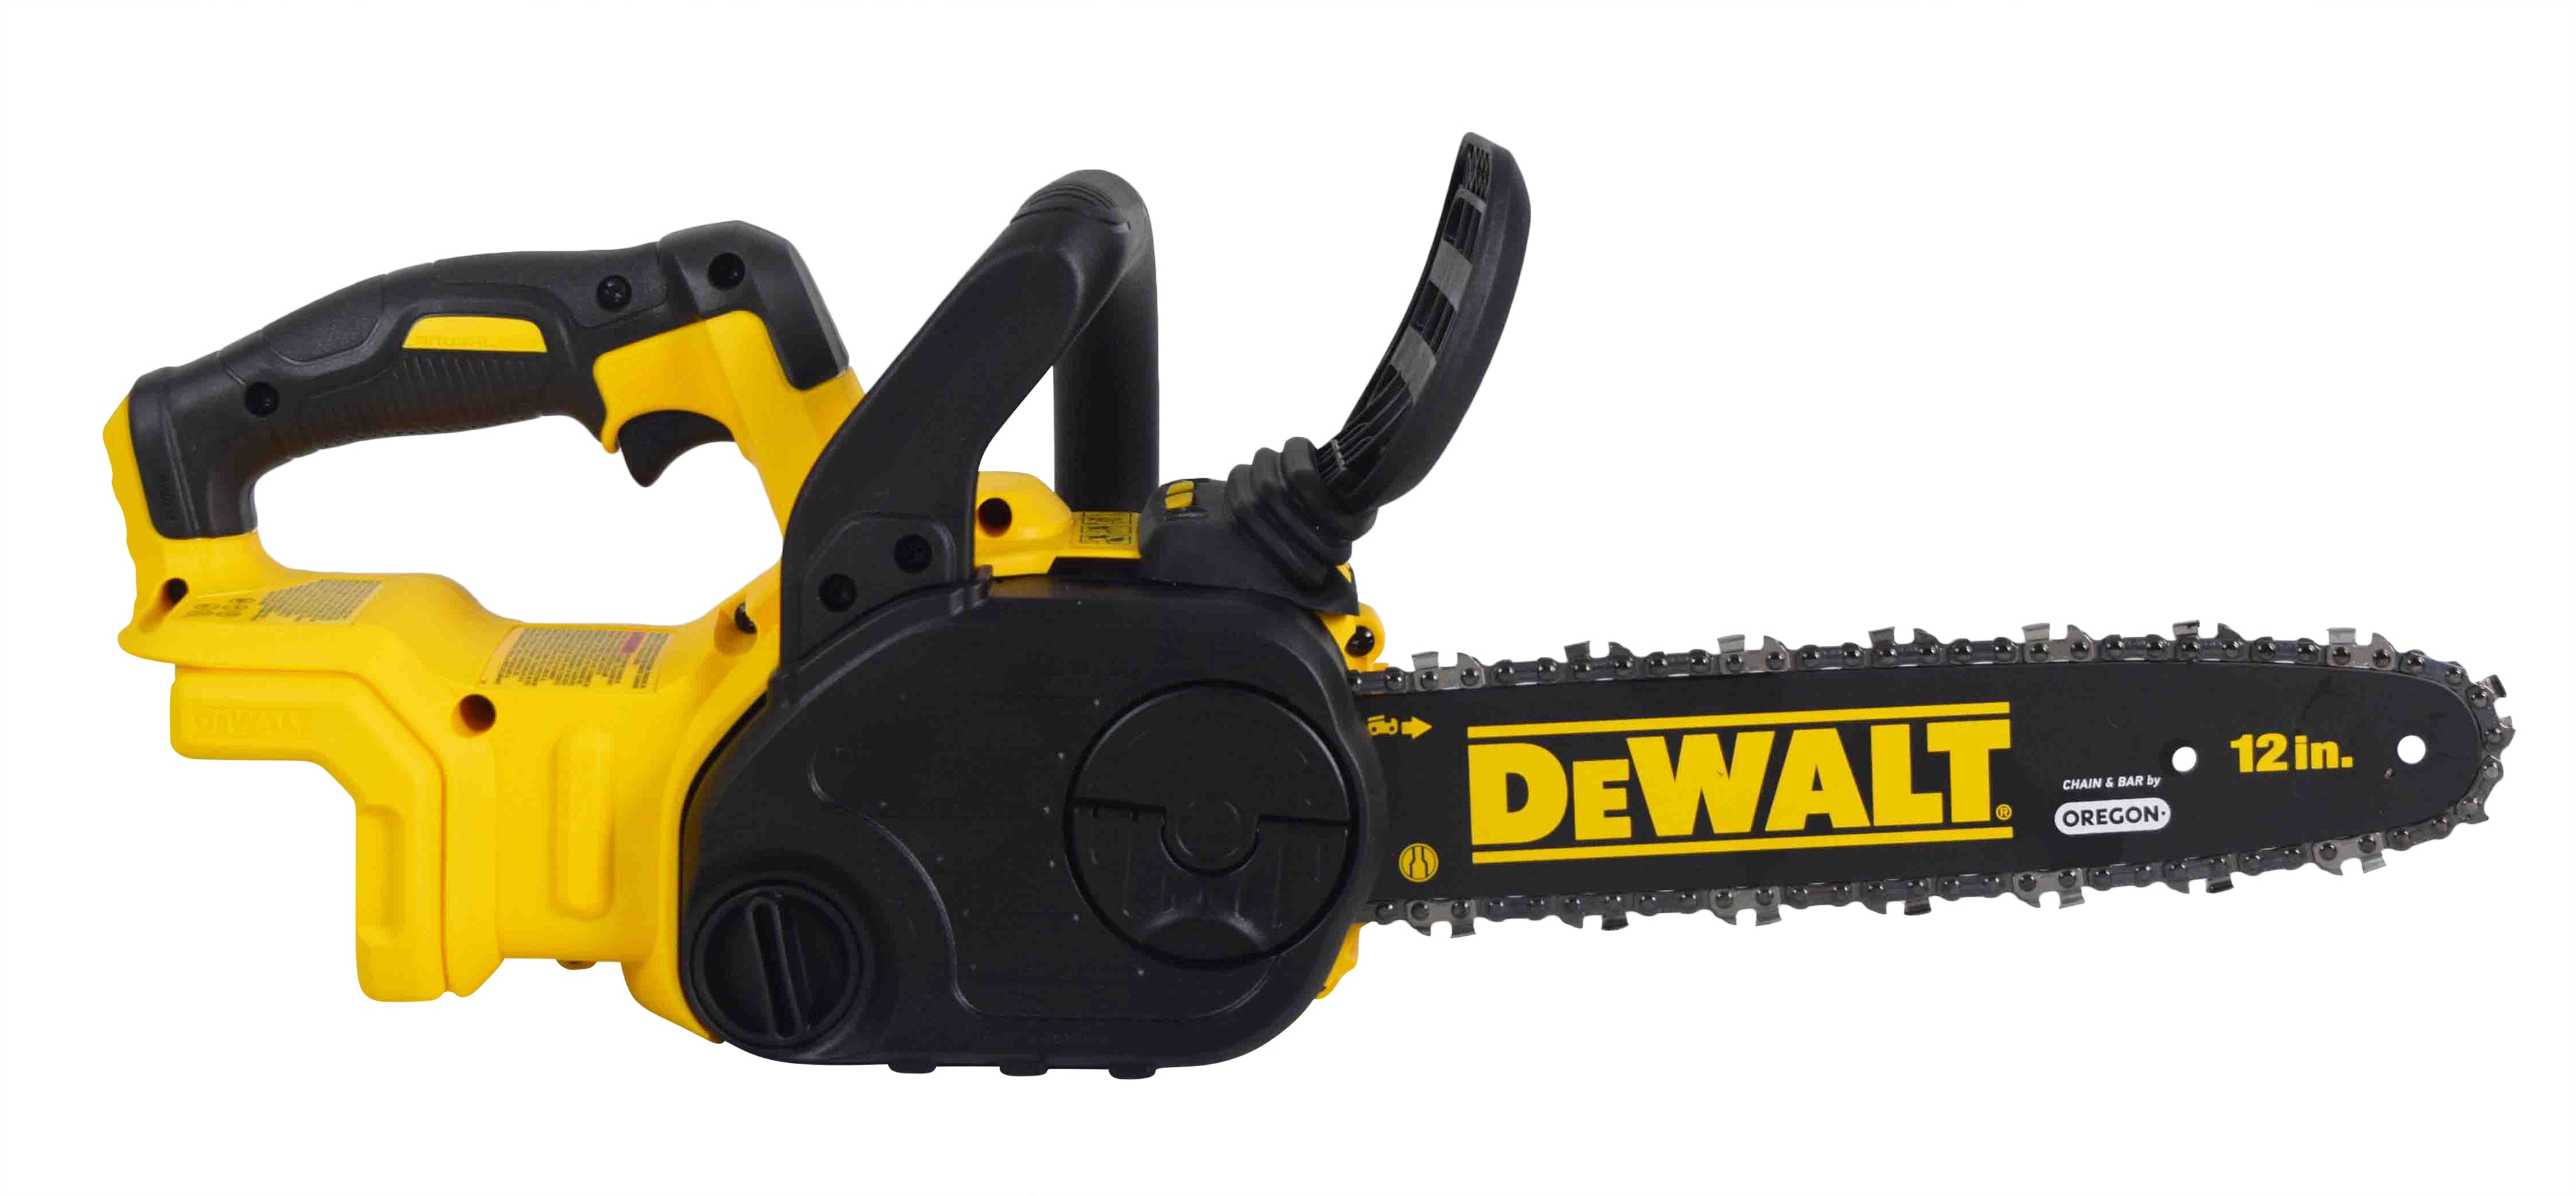 Dewalt DCCS620P1 20V MAX 5.0 Ah Cordless Lithium-Ion Compact Chainsaw Kit